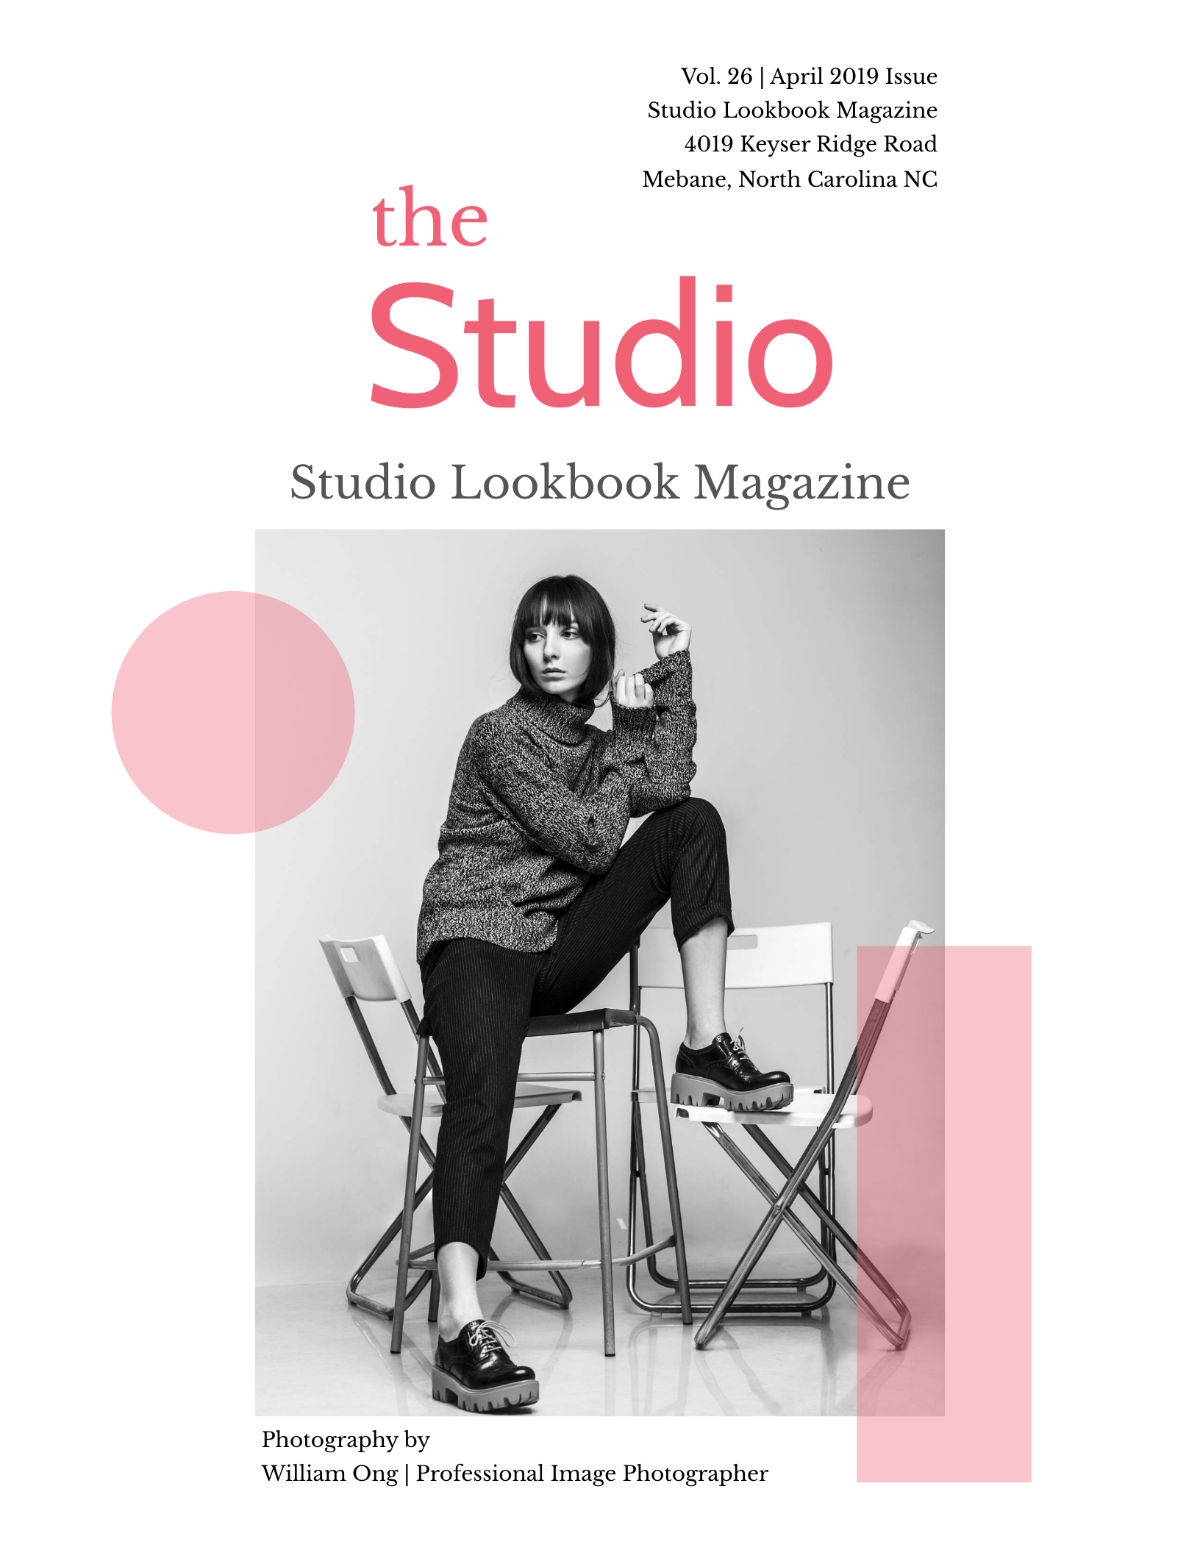 Studio Lookbook Magazine Template